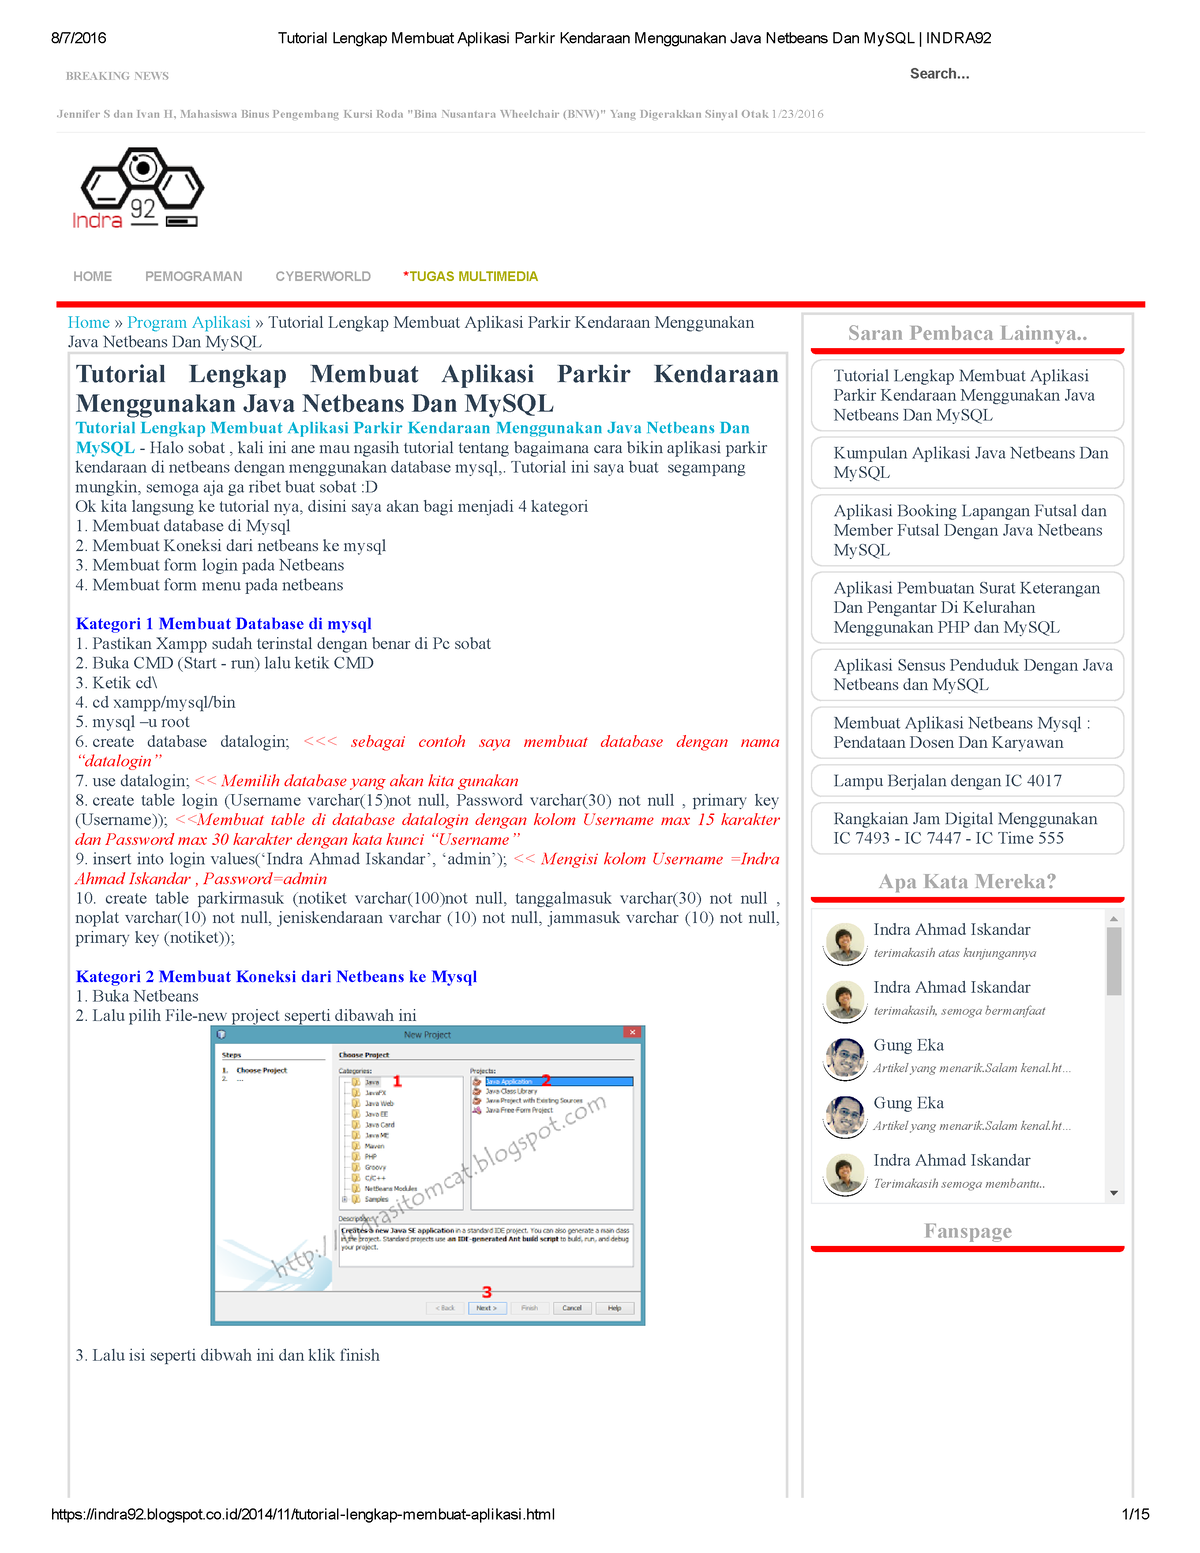 Tutorial Lengkap Membuat Aplikasi Parkir Kendaraan Menggunakan Java Netbeans Dan My Sql Indra 92 0492